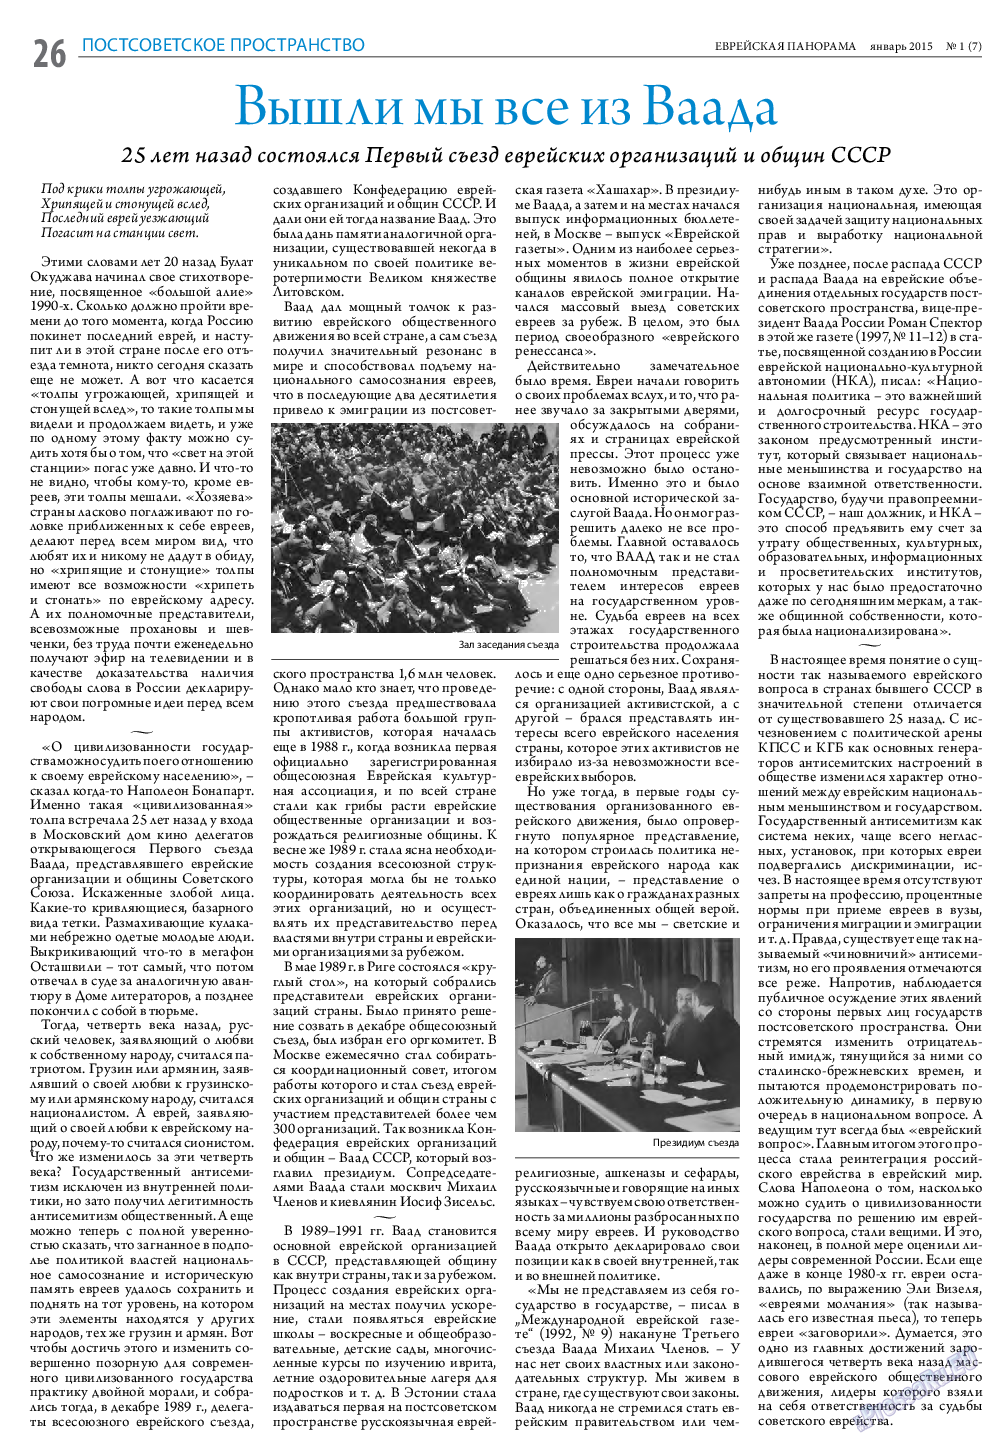 Еврейская панорама, газета. 2015 №1 стр.26